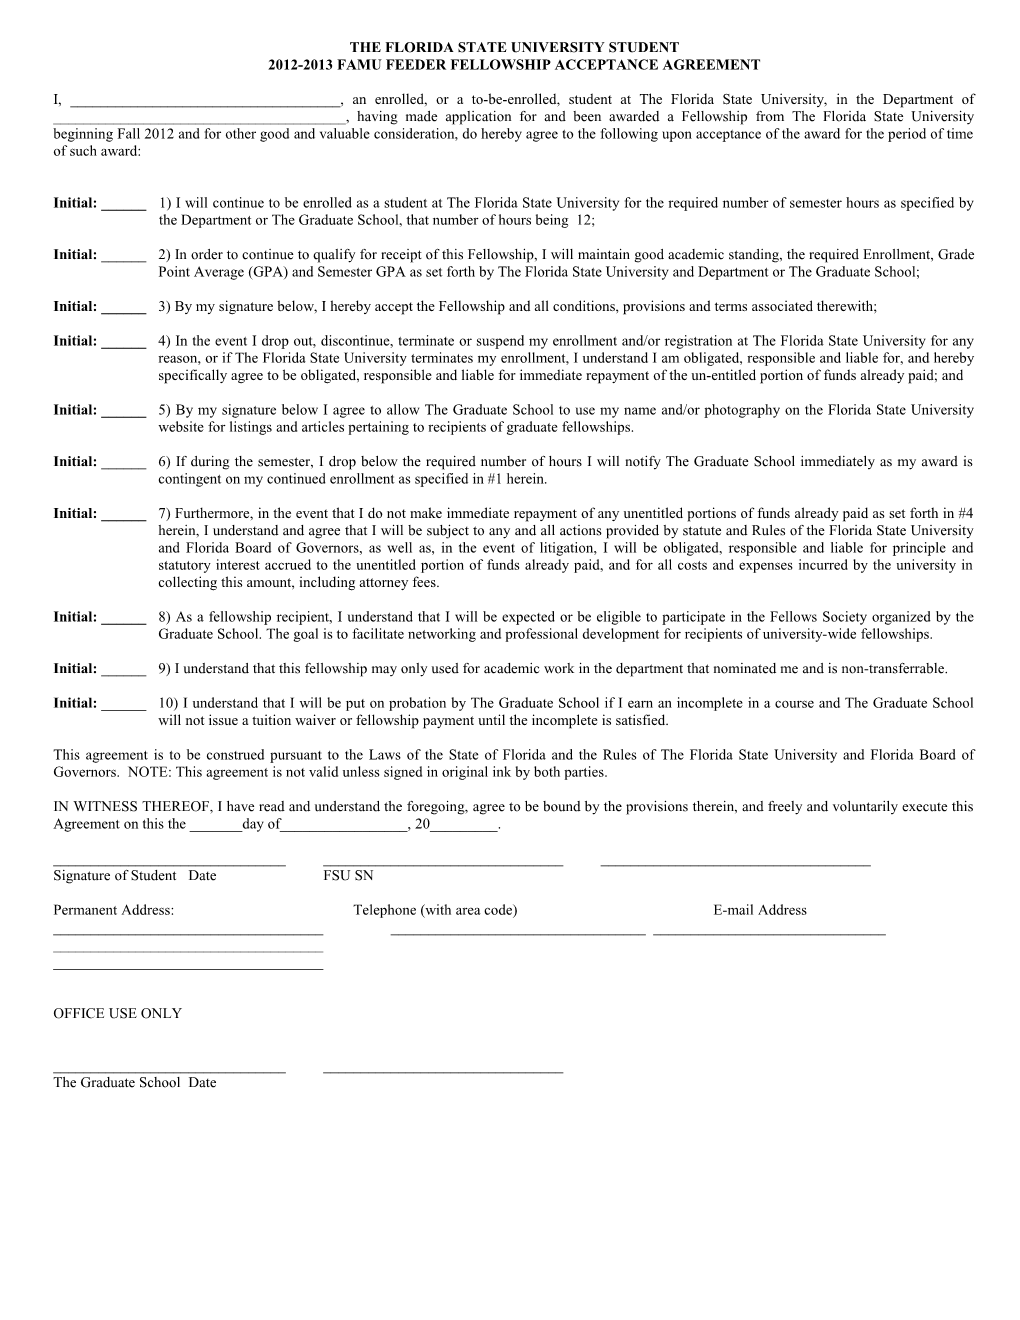 UF Acceptance Agreement